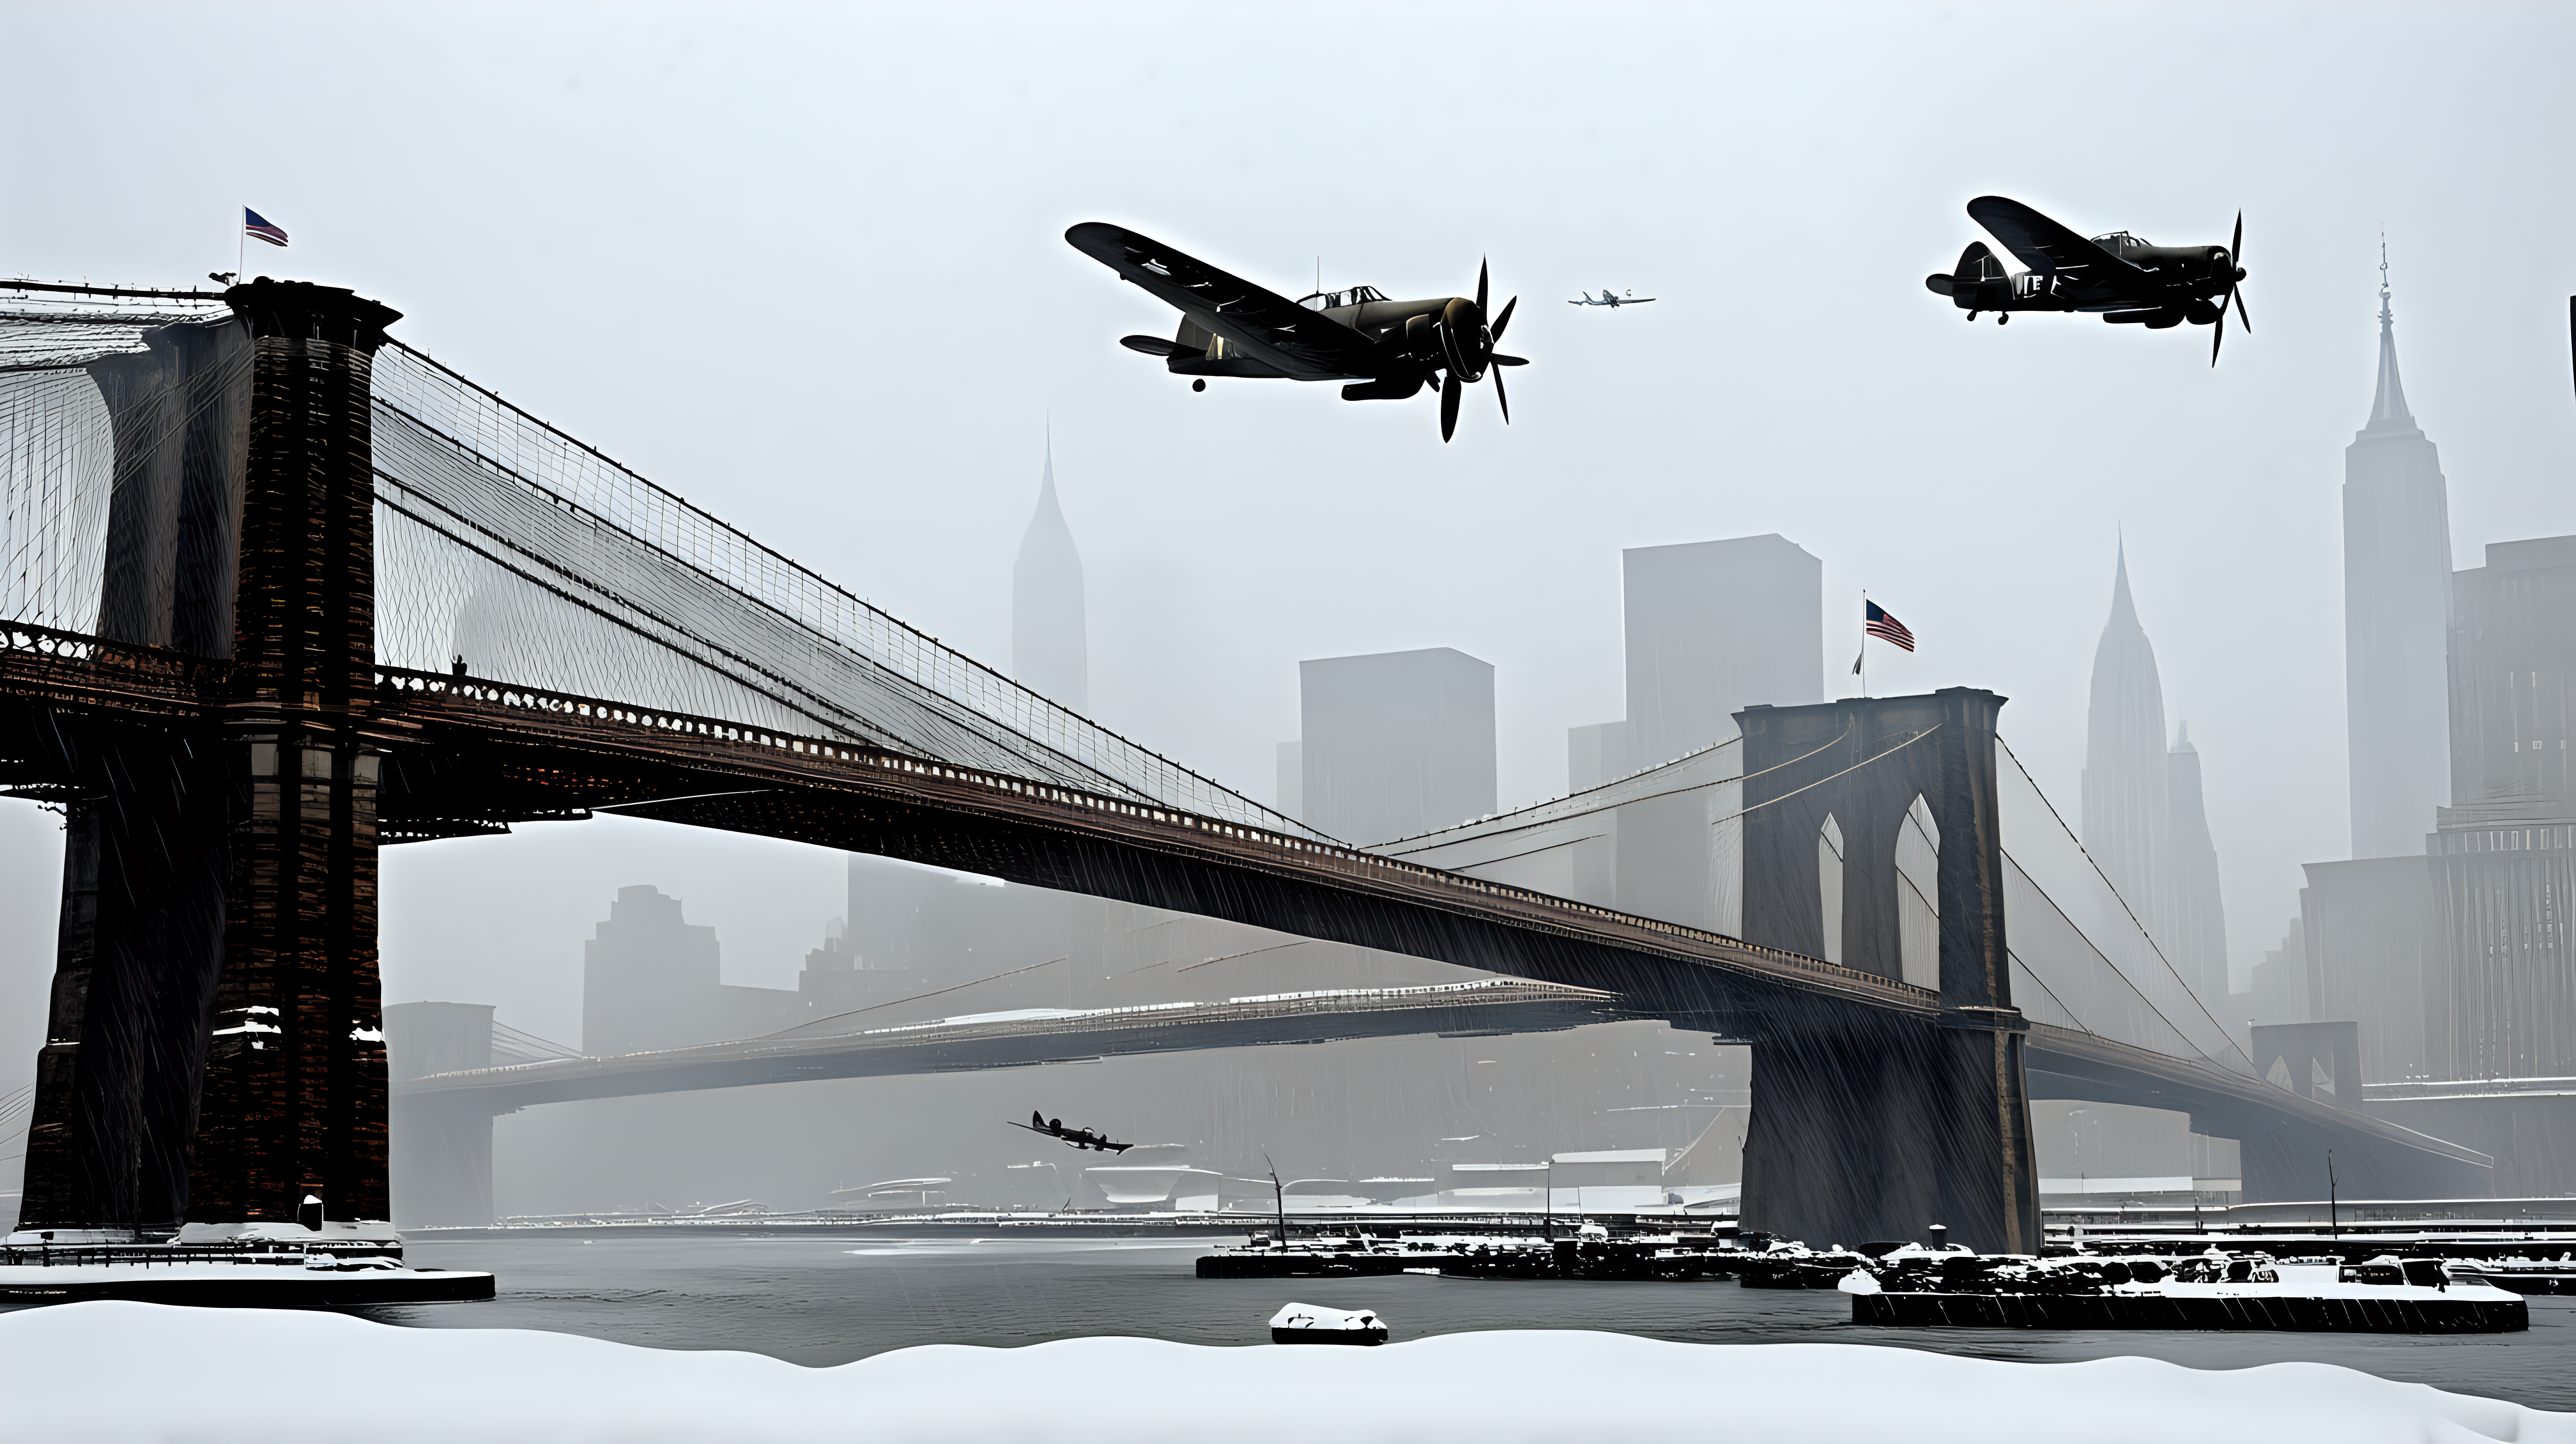 WW2 planes flying over Brooklyn bridge shrouded in snow storm